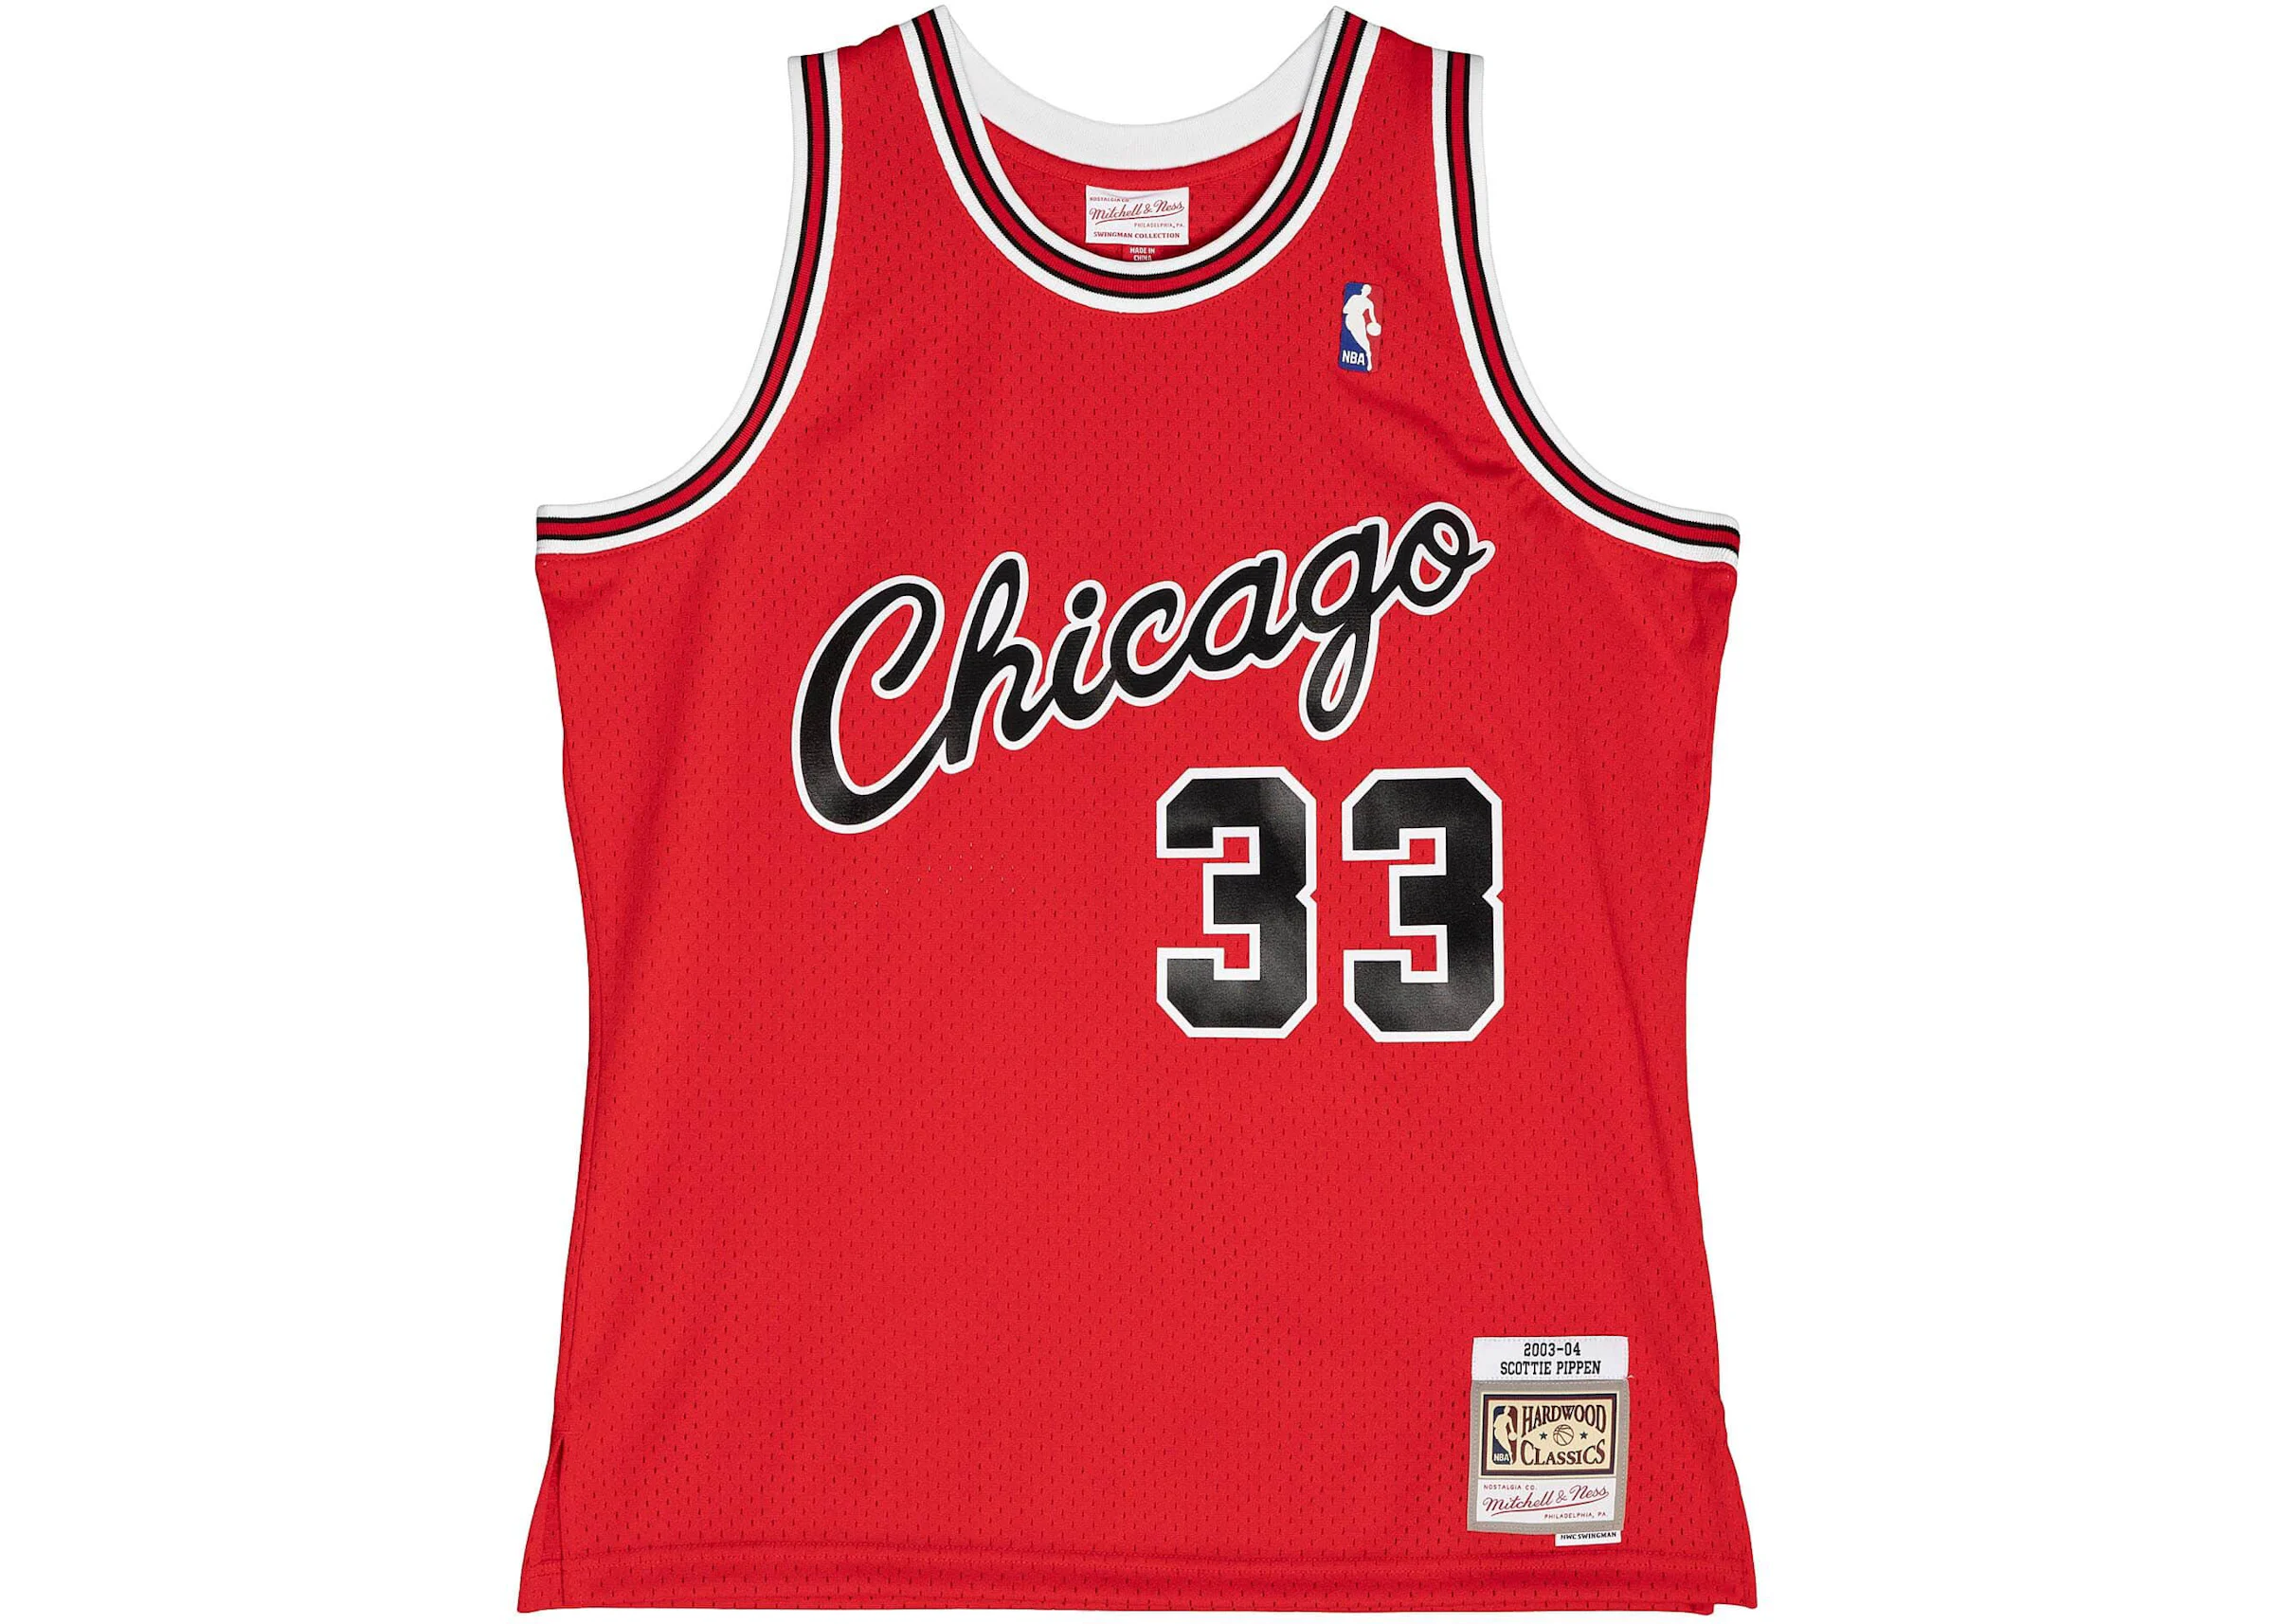 Mitchell & Ness Scottie Pippen Chicago Bulls Alternate 2003-04 NBA